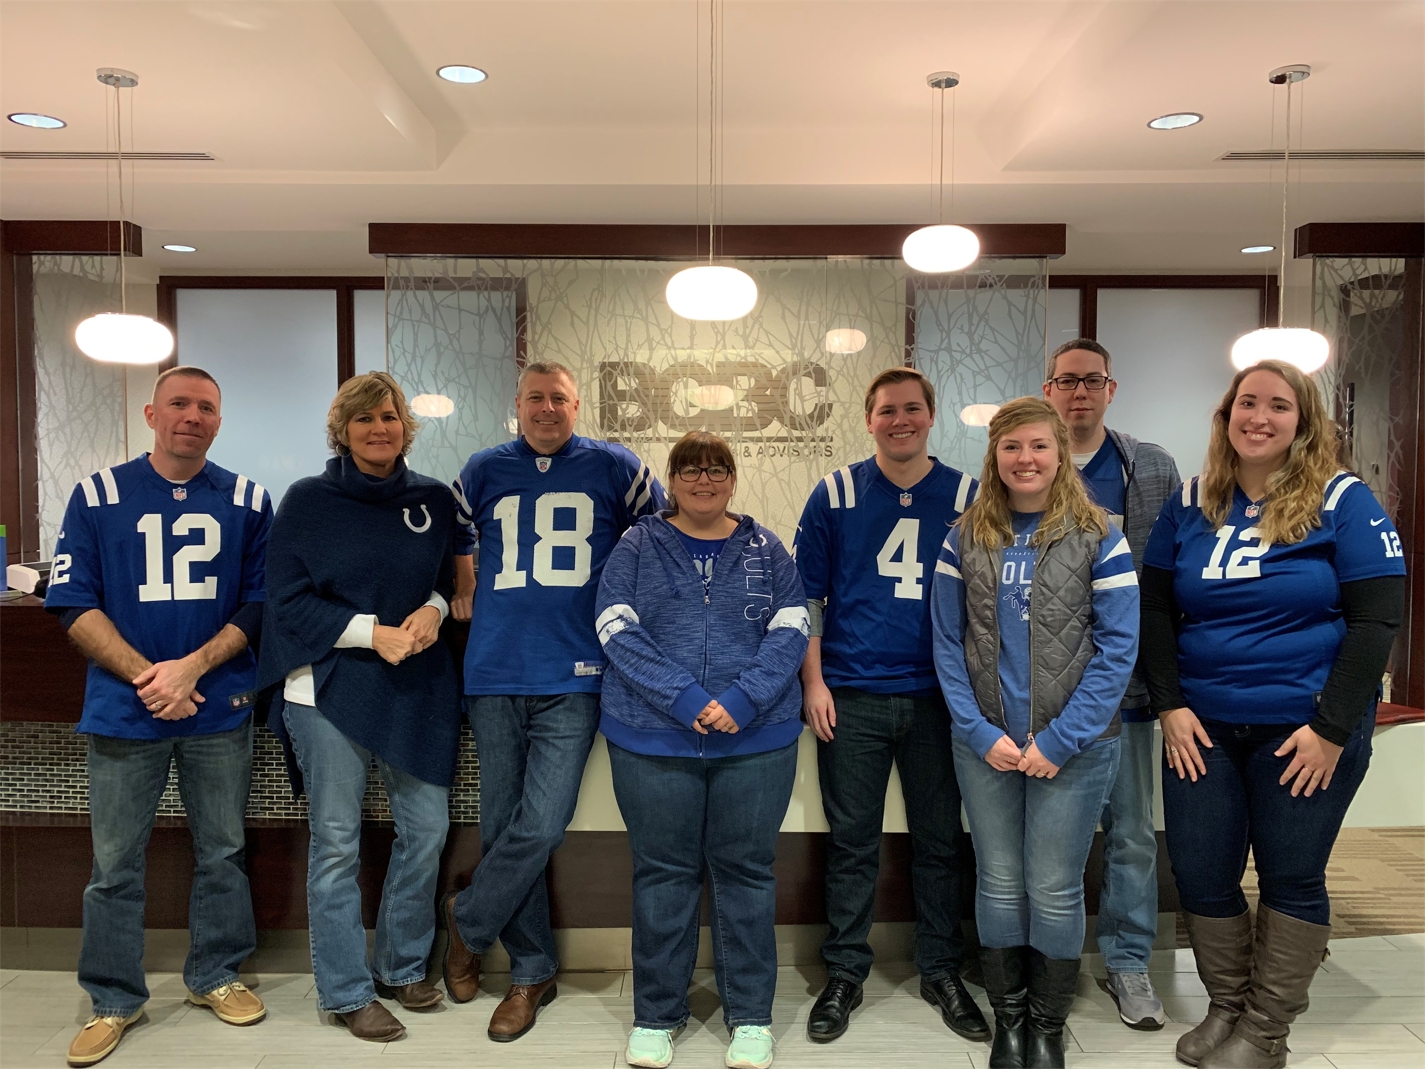 Colts gear picture Jan. 2019.jpg